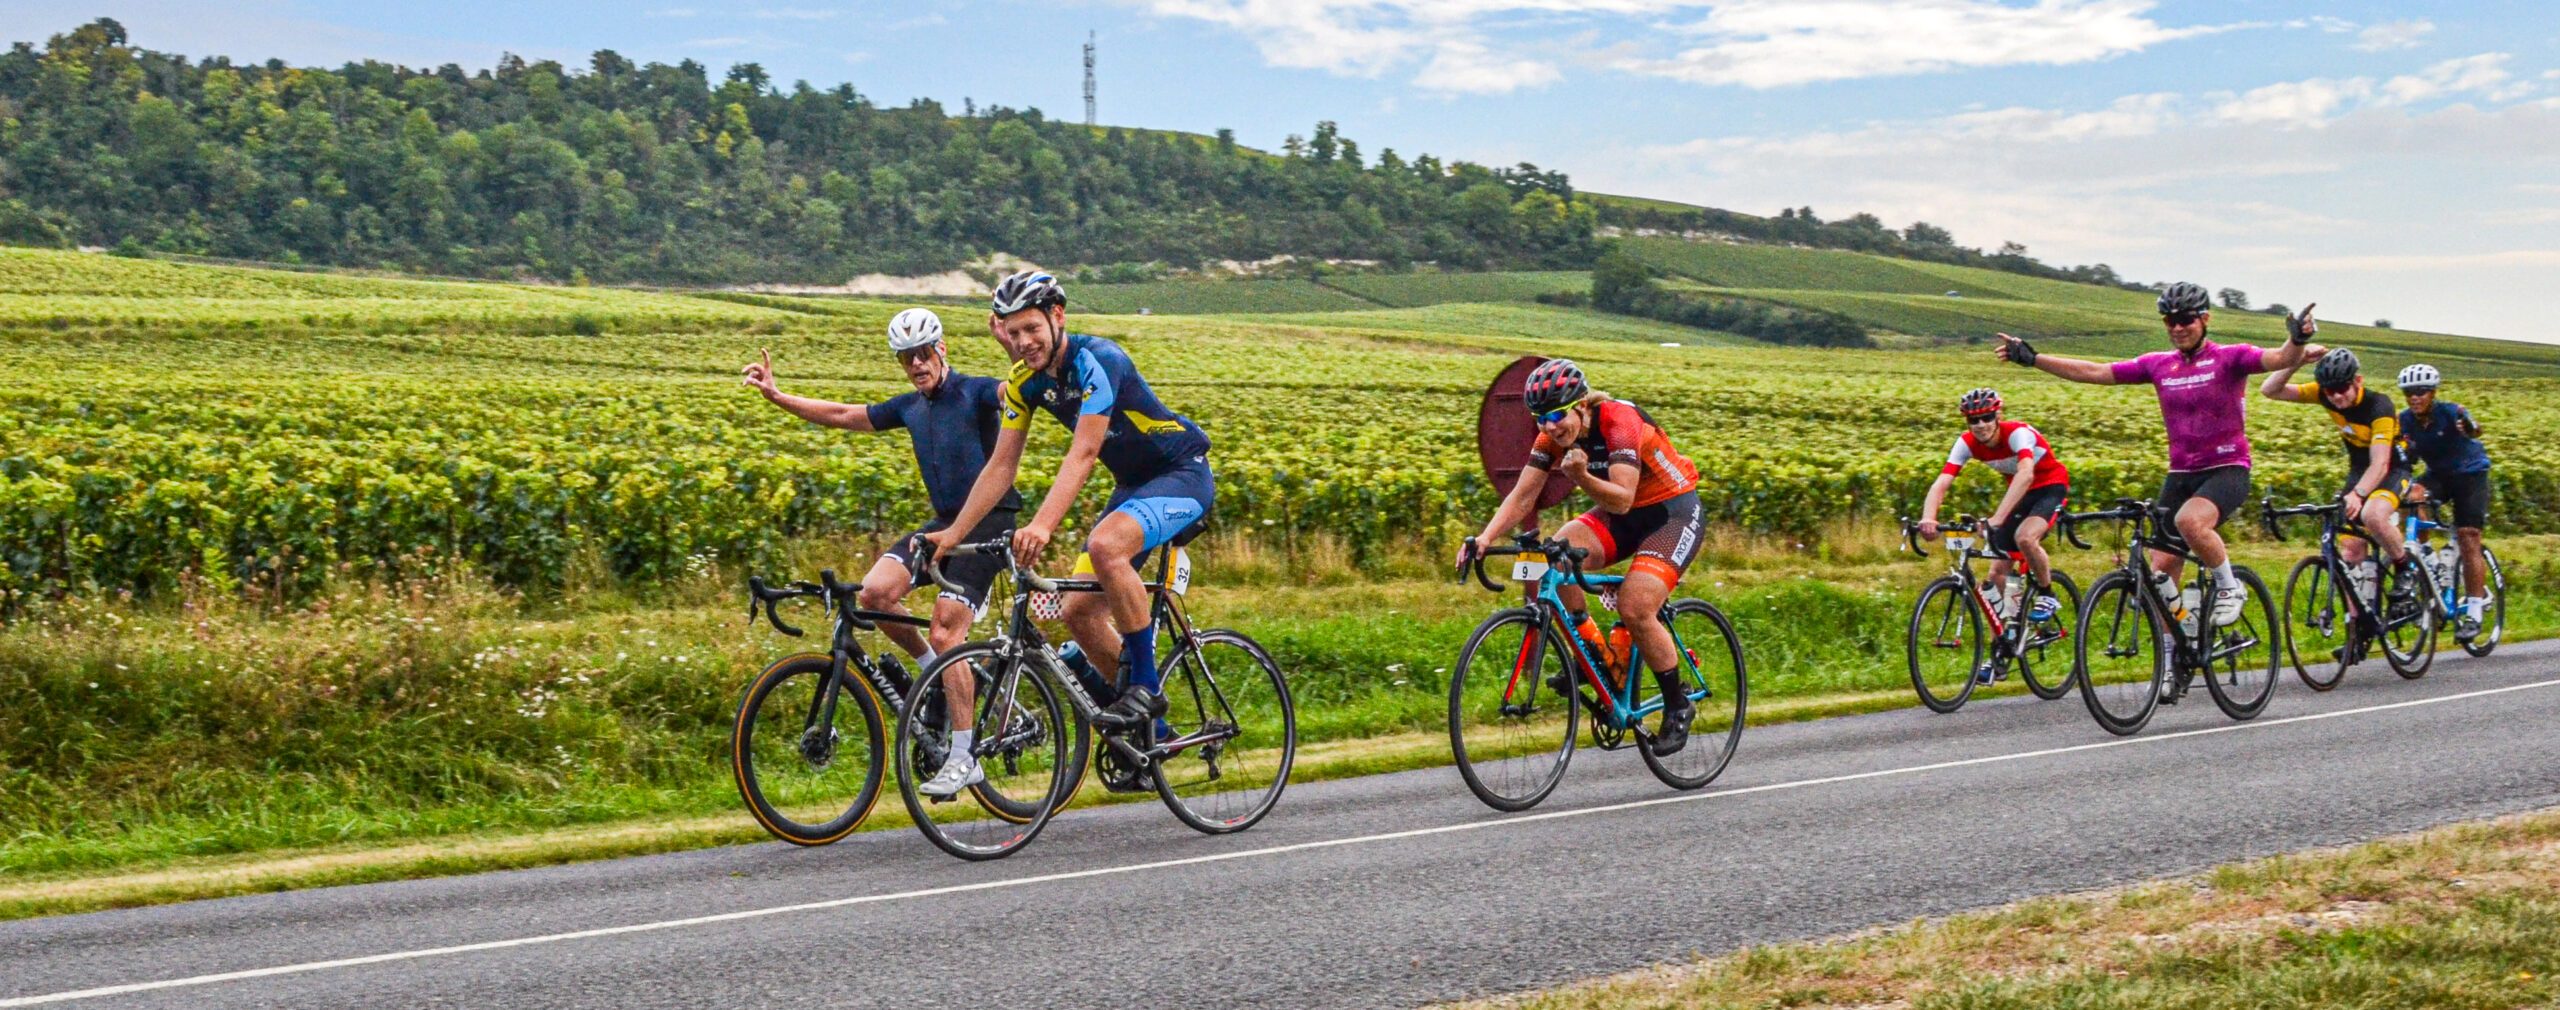 biketrips fietsen mooi genieten lachen gezellig groepsreis parijs five countries fietssport vakantie